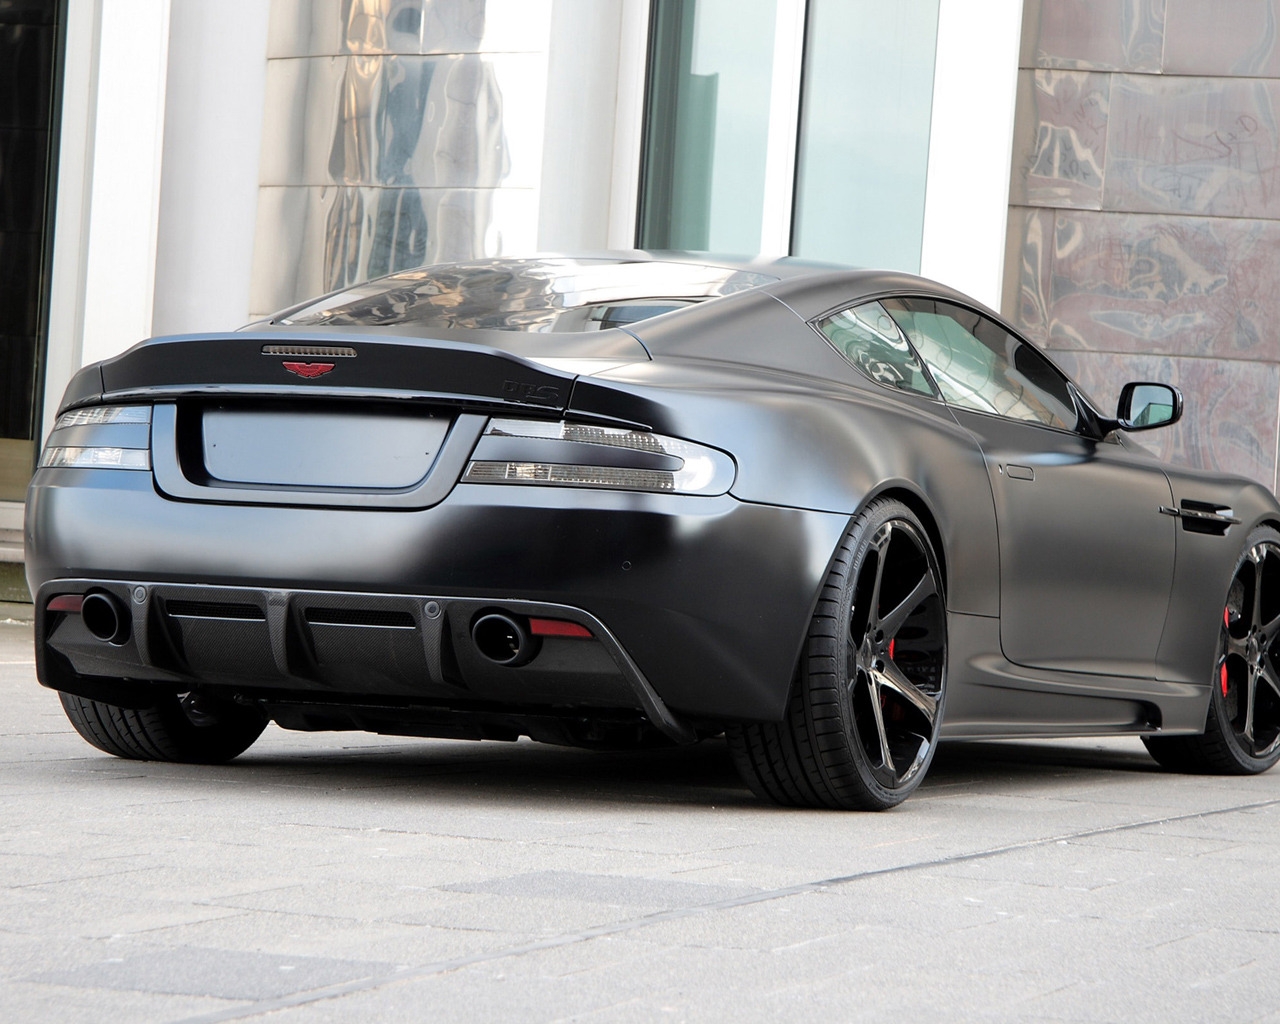 Aston Martin DBS Superior Black Edition Rear for 1280 x 1024 resolution